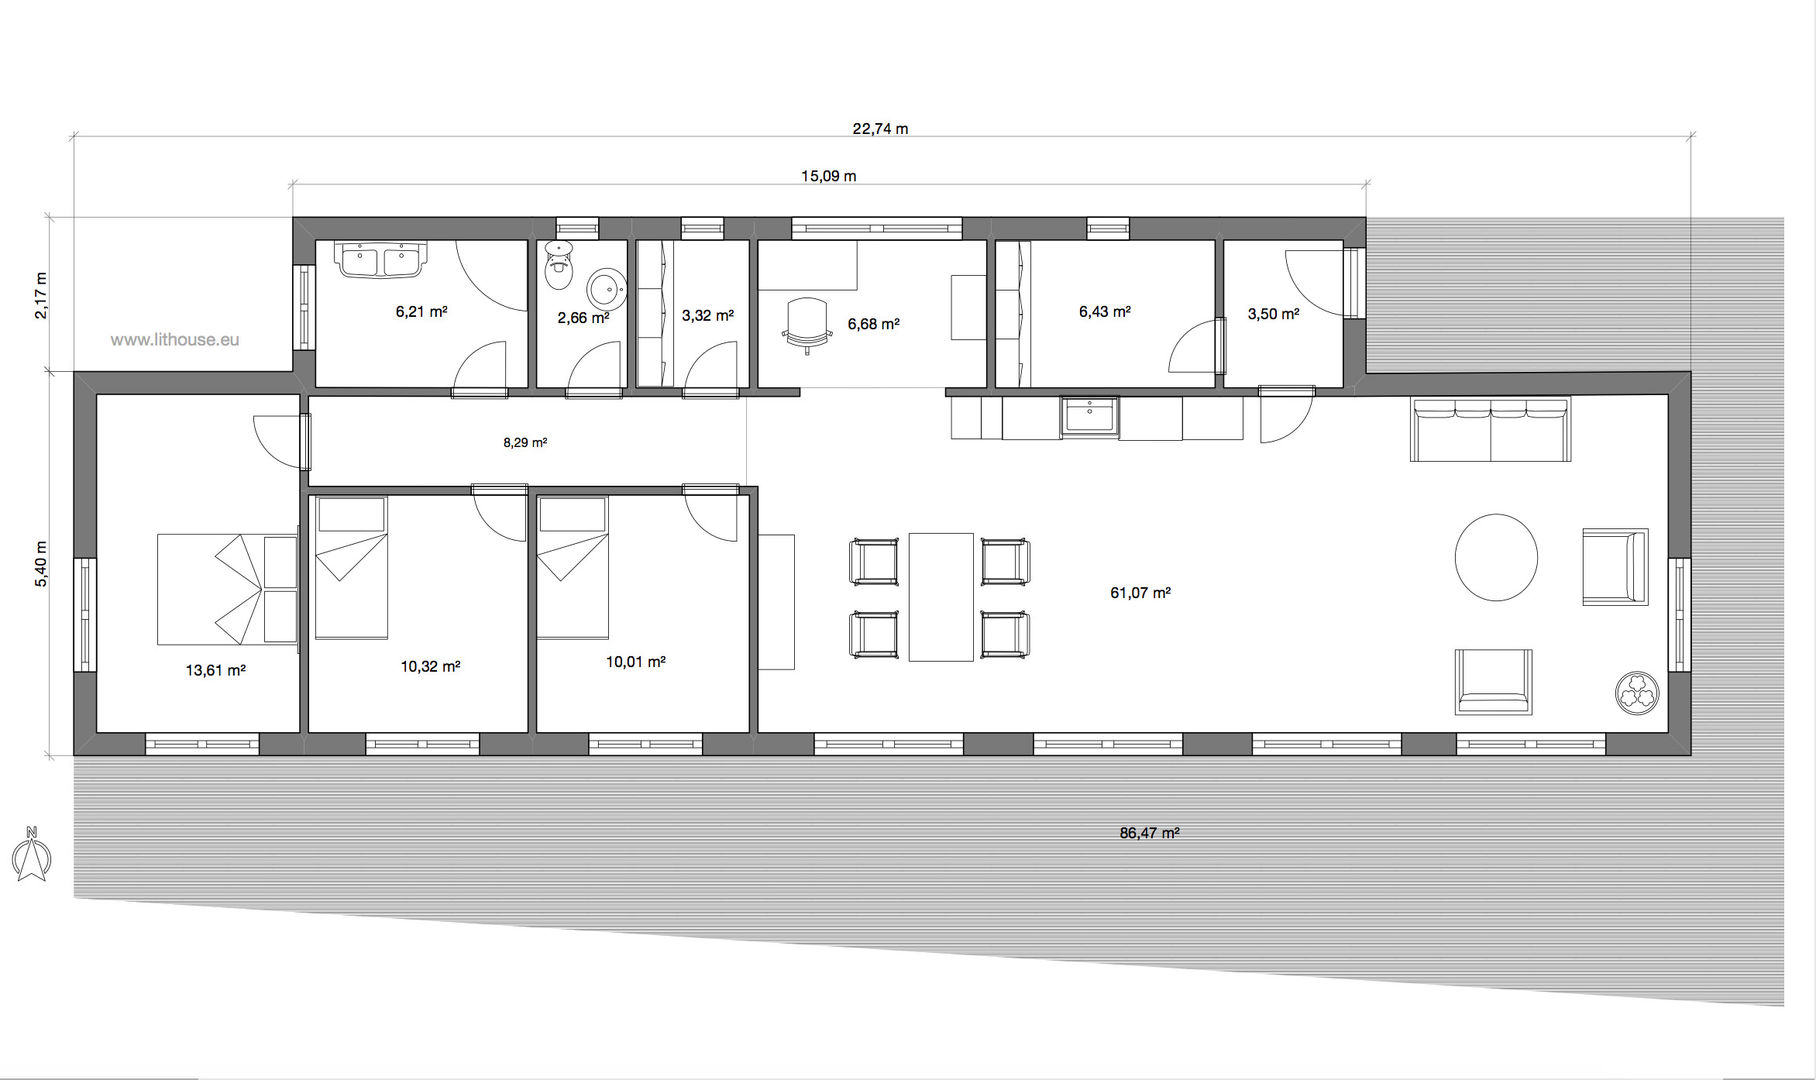 Floor Plan: modern by Namas , Modern floor plan,design,container house